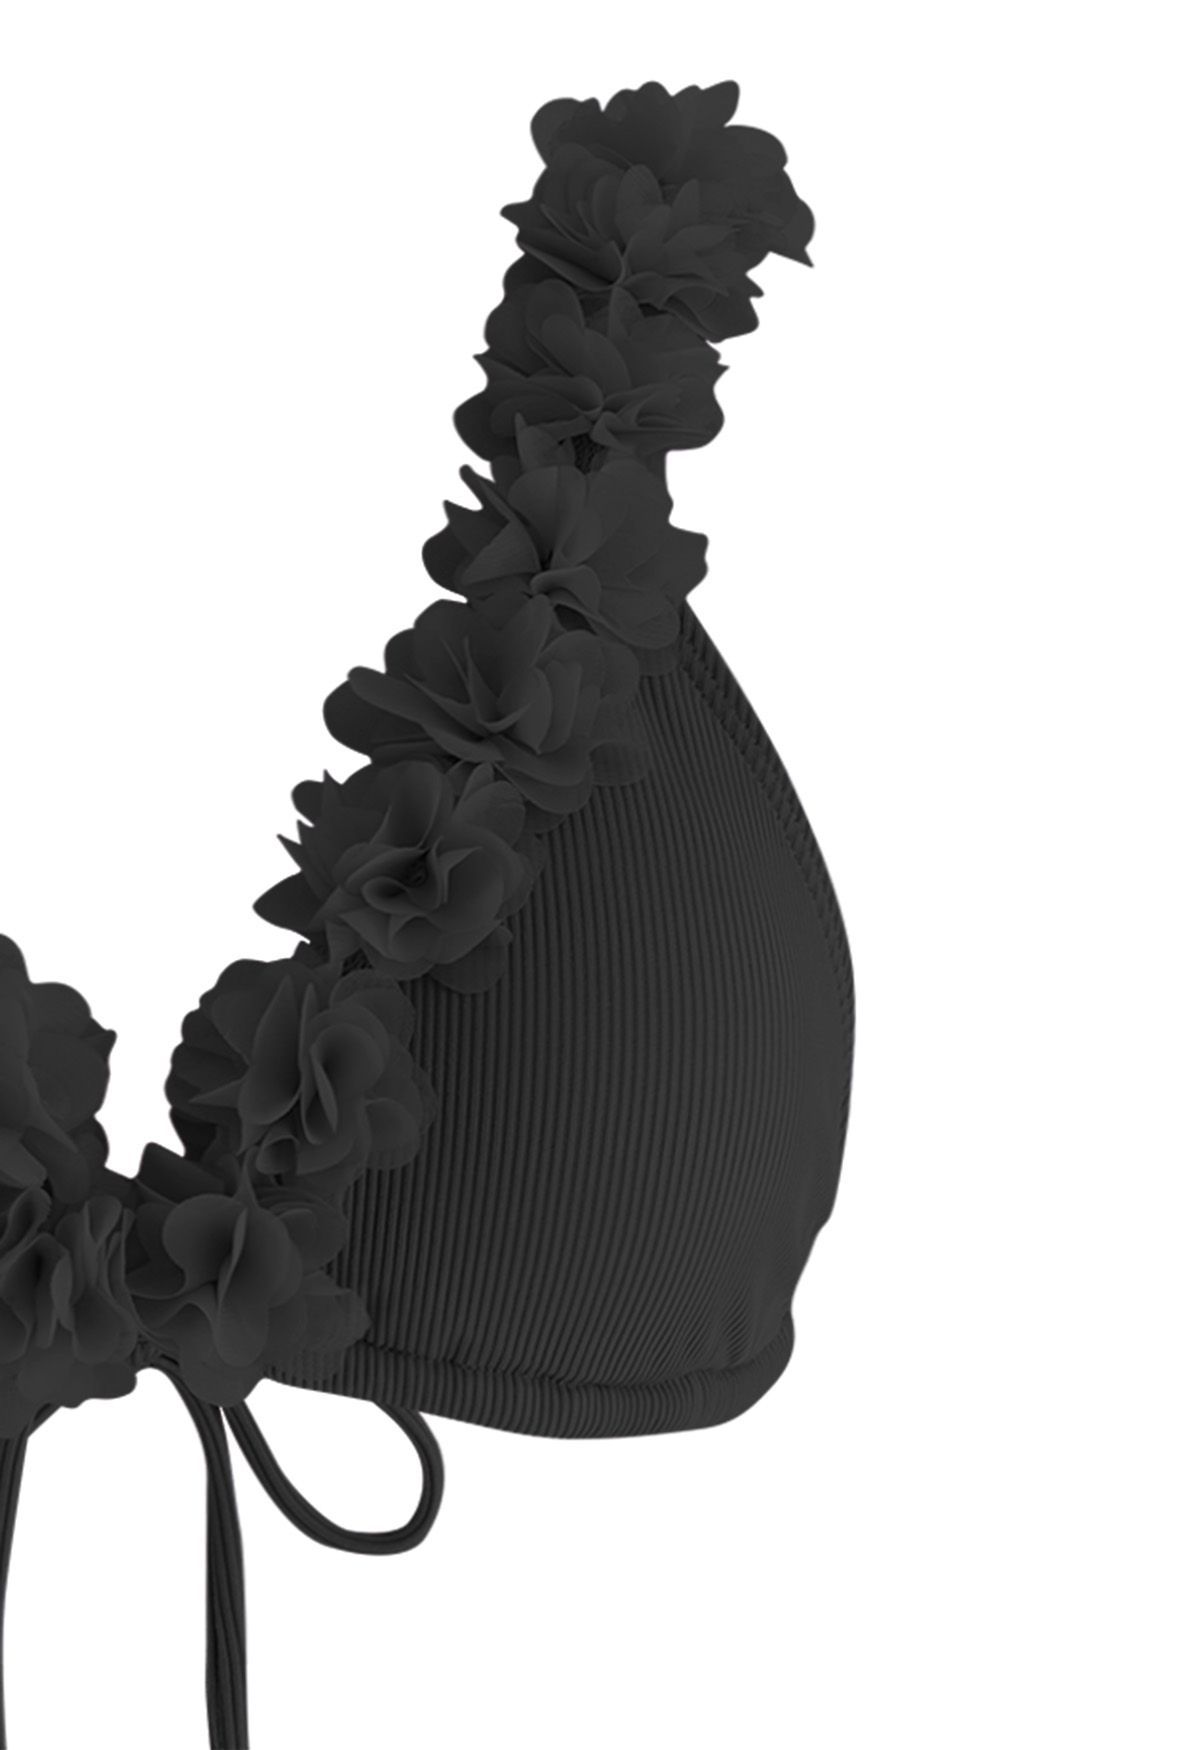 3D Mesh Floral Deep-V-Bikini-Set in Schwarz